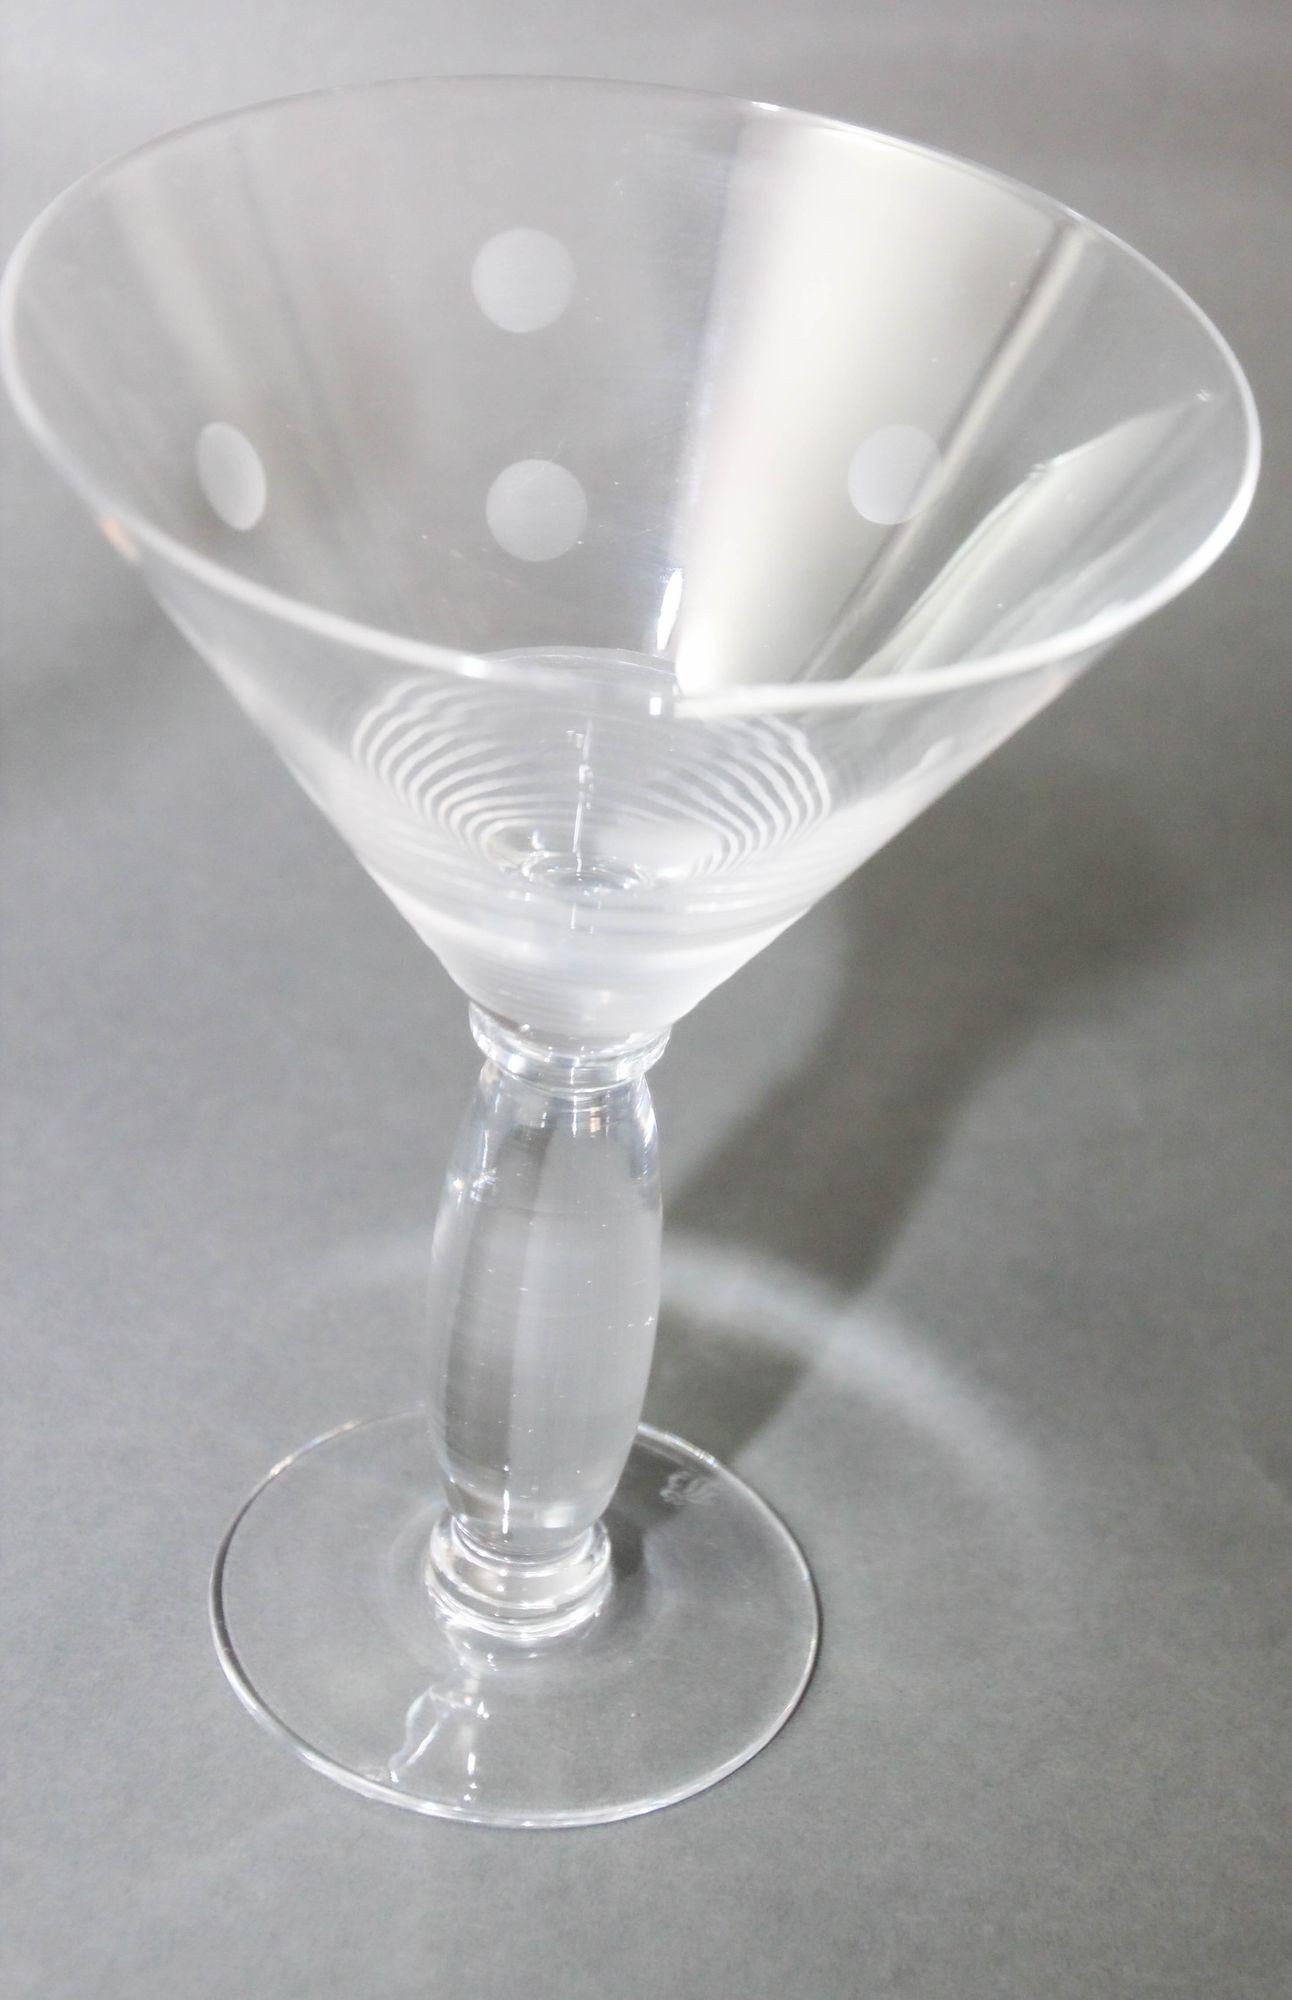 ROYAL DOULTON Martini Crystal Etched Glasses Set of 2 Vintage Cocktail Barware For Sale 5